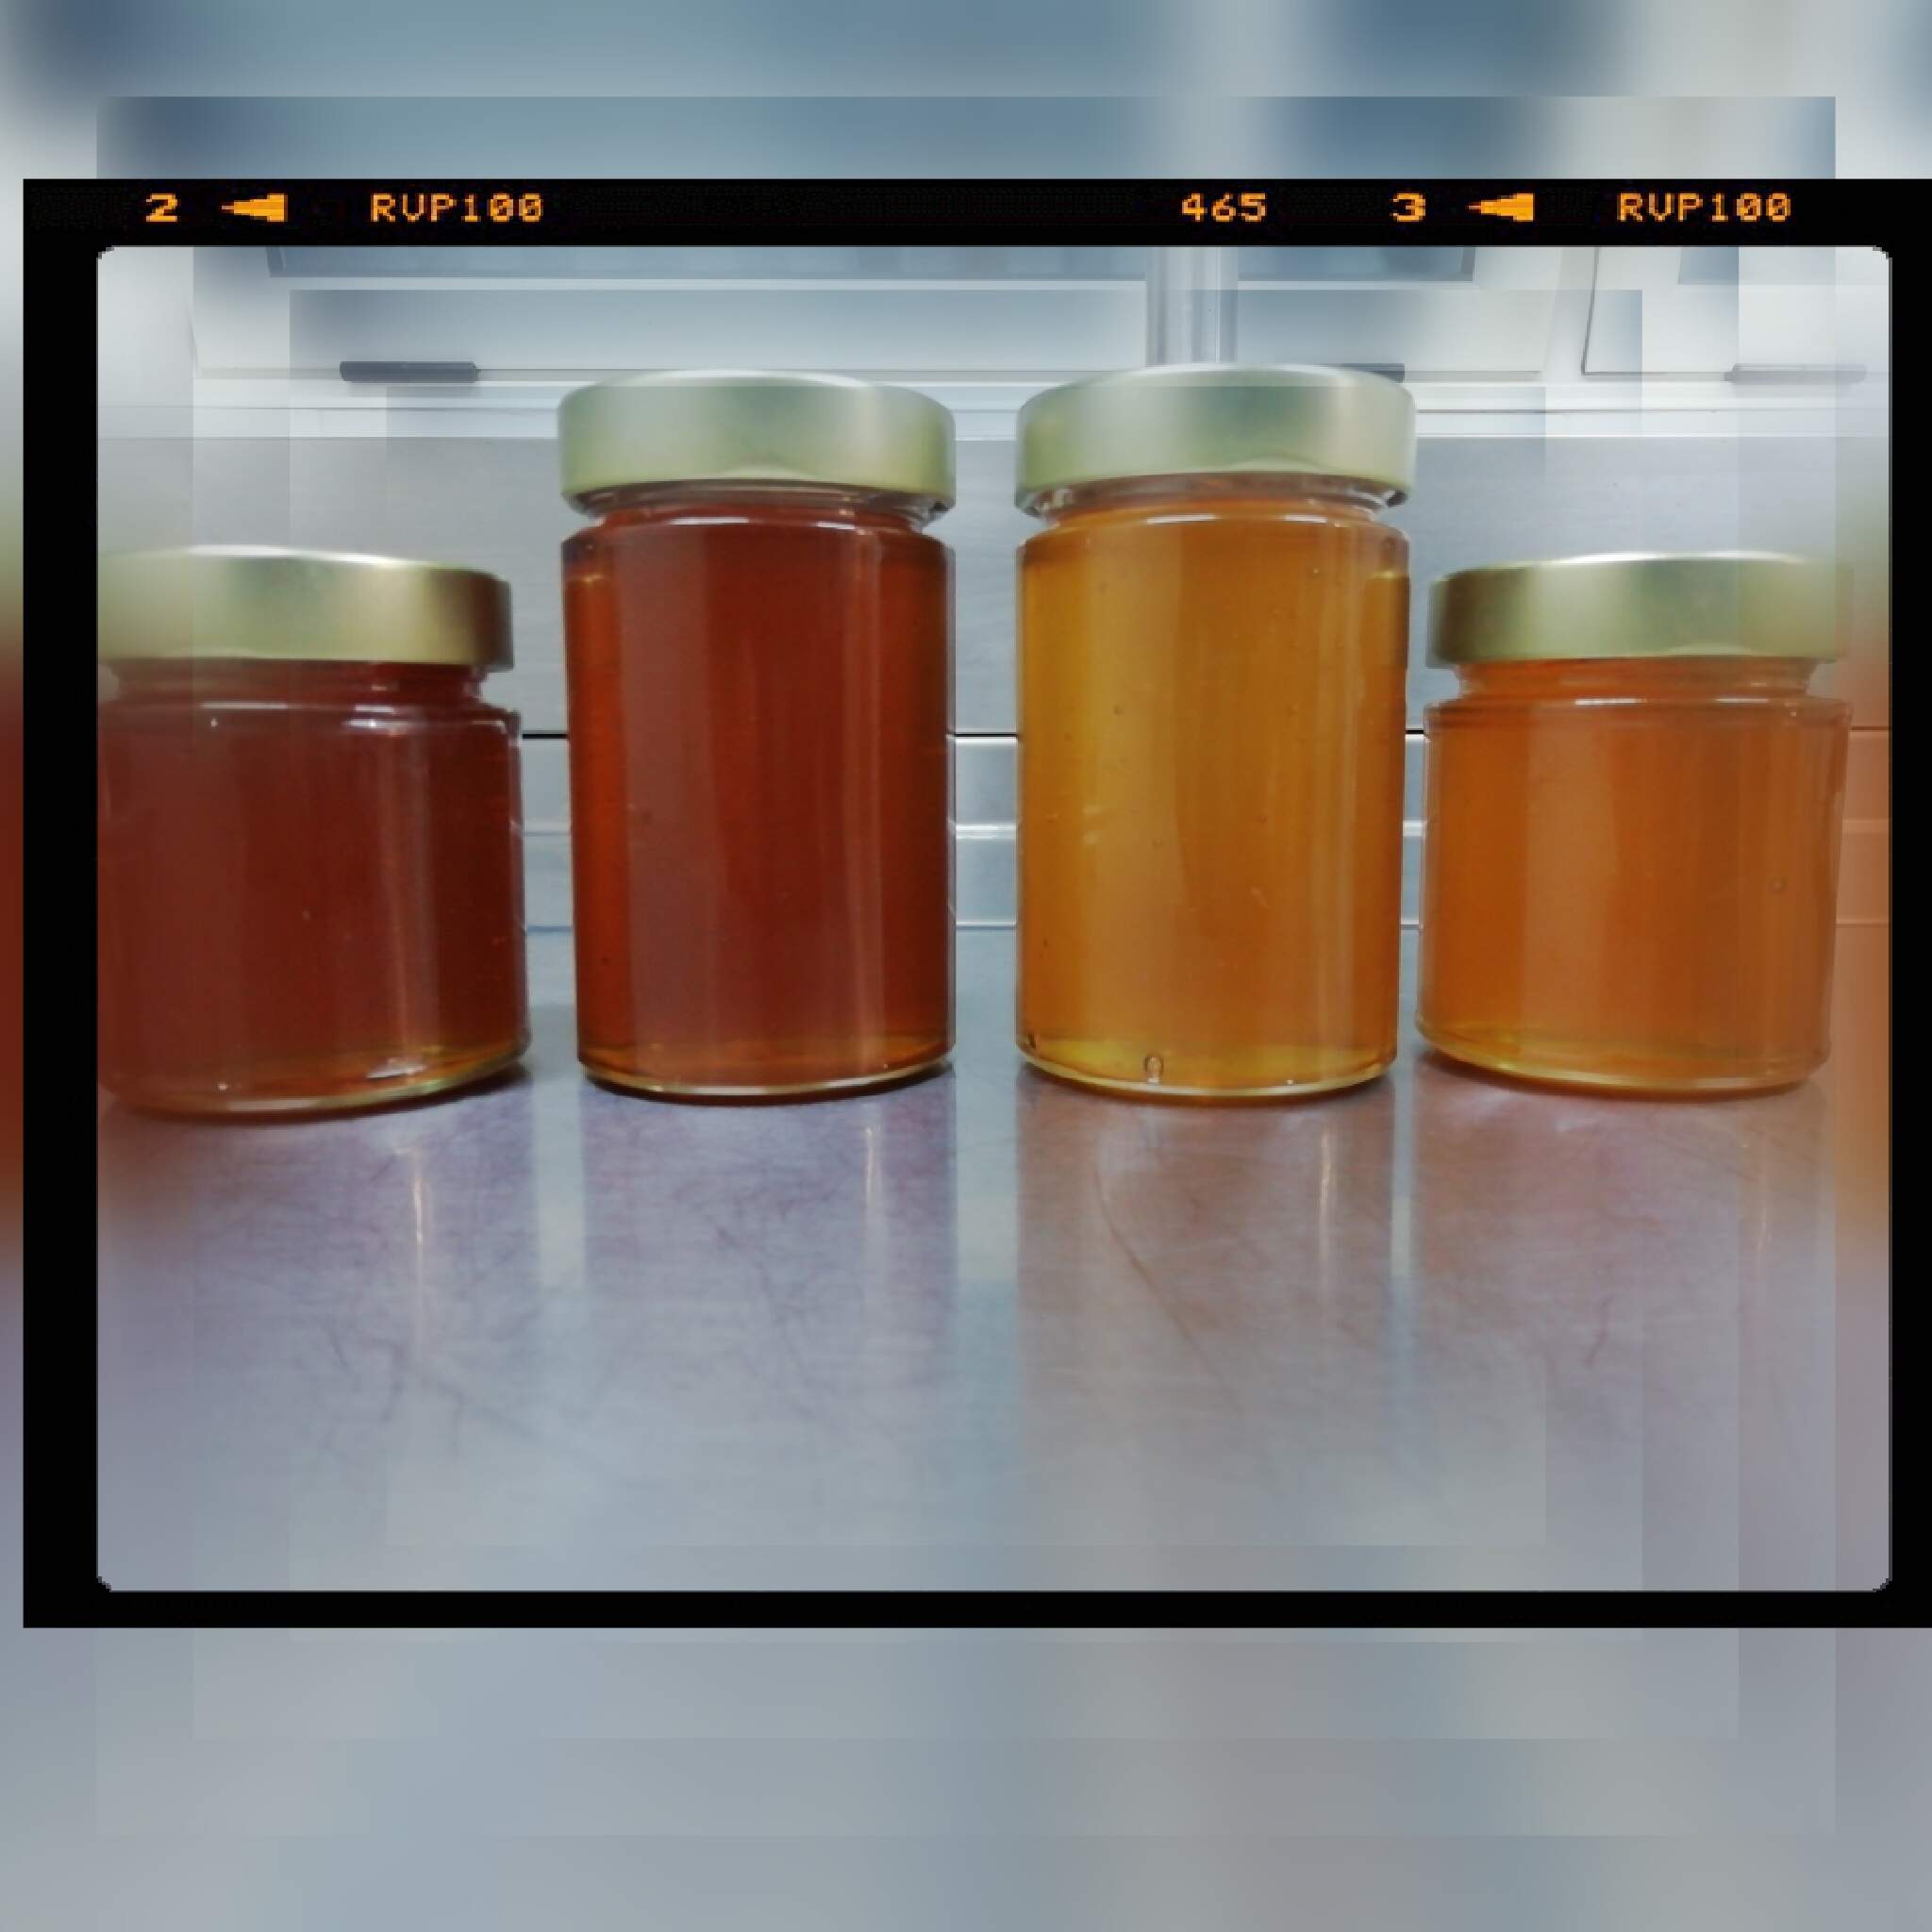 Miele di Acacia - Acacia Honey